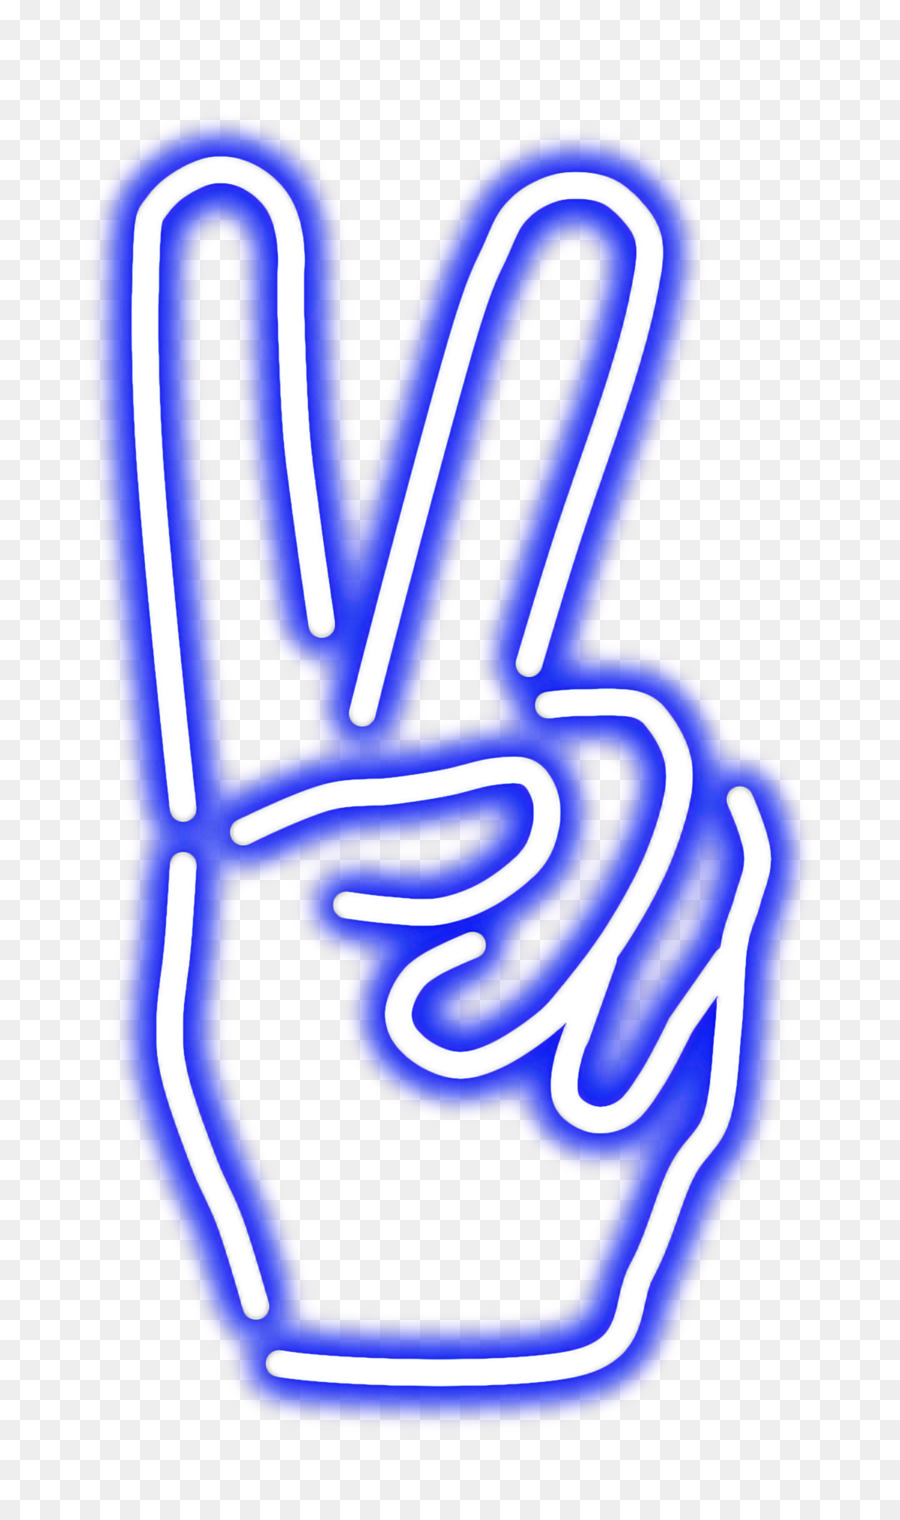 linea mano dito gesto blu elettrico - 